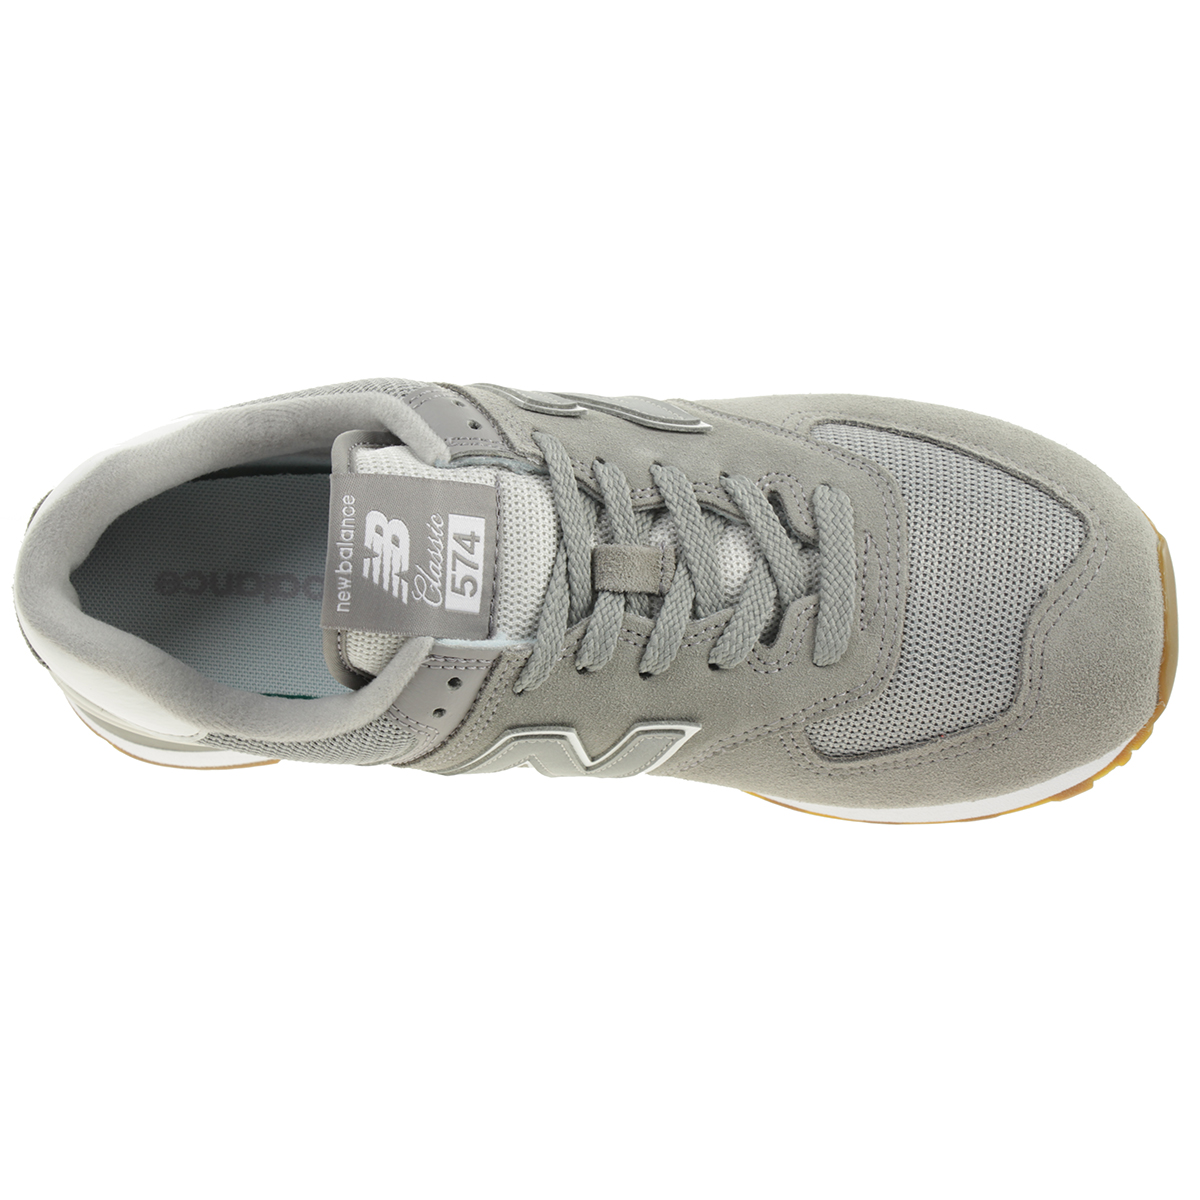 New Balance ML 574 SPU Classic Sneaker Herren Schuhe grau